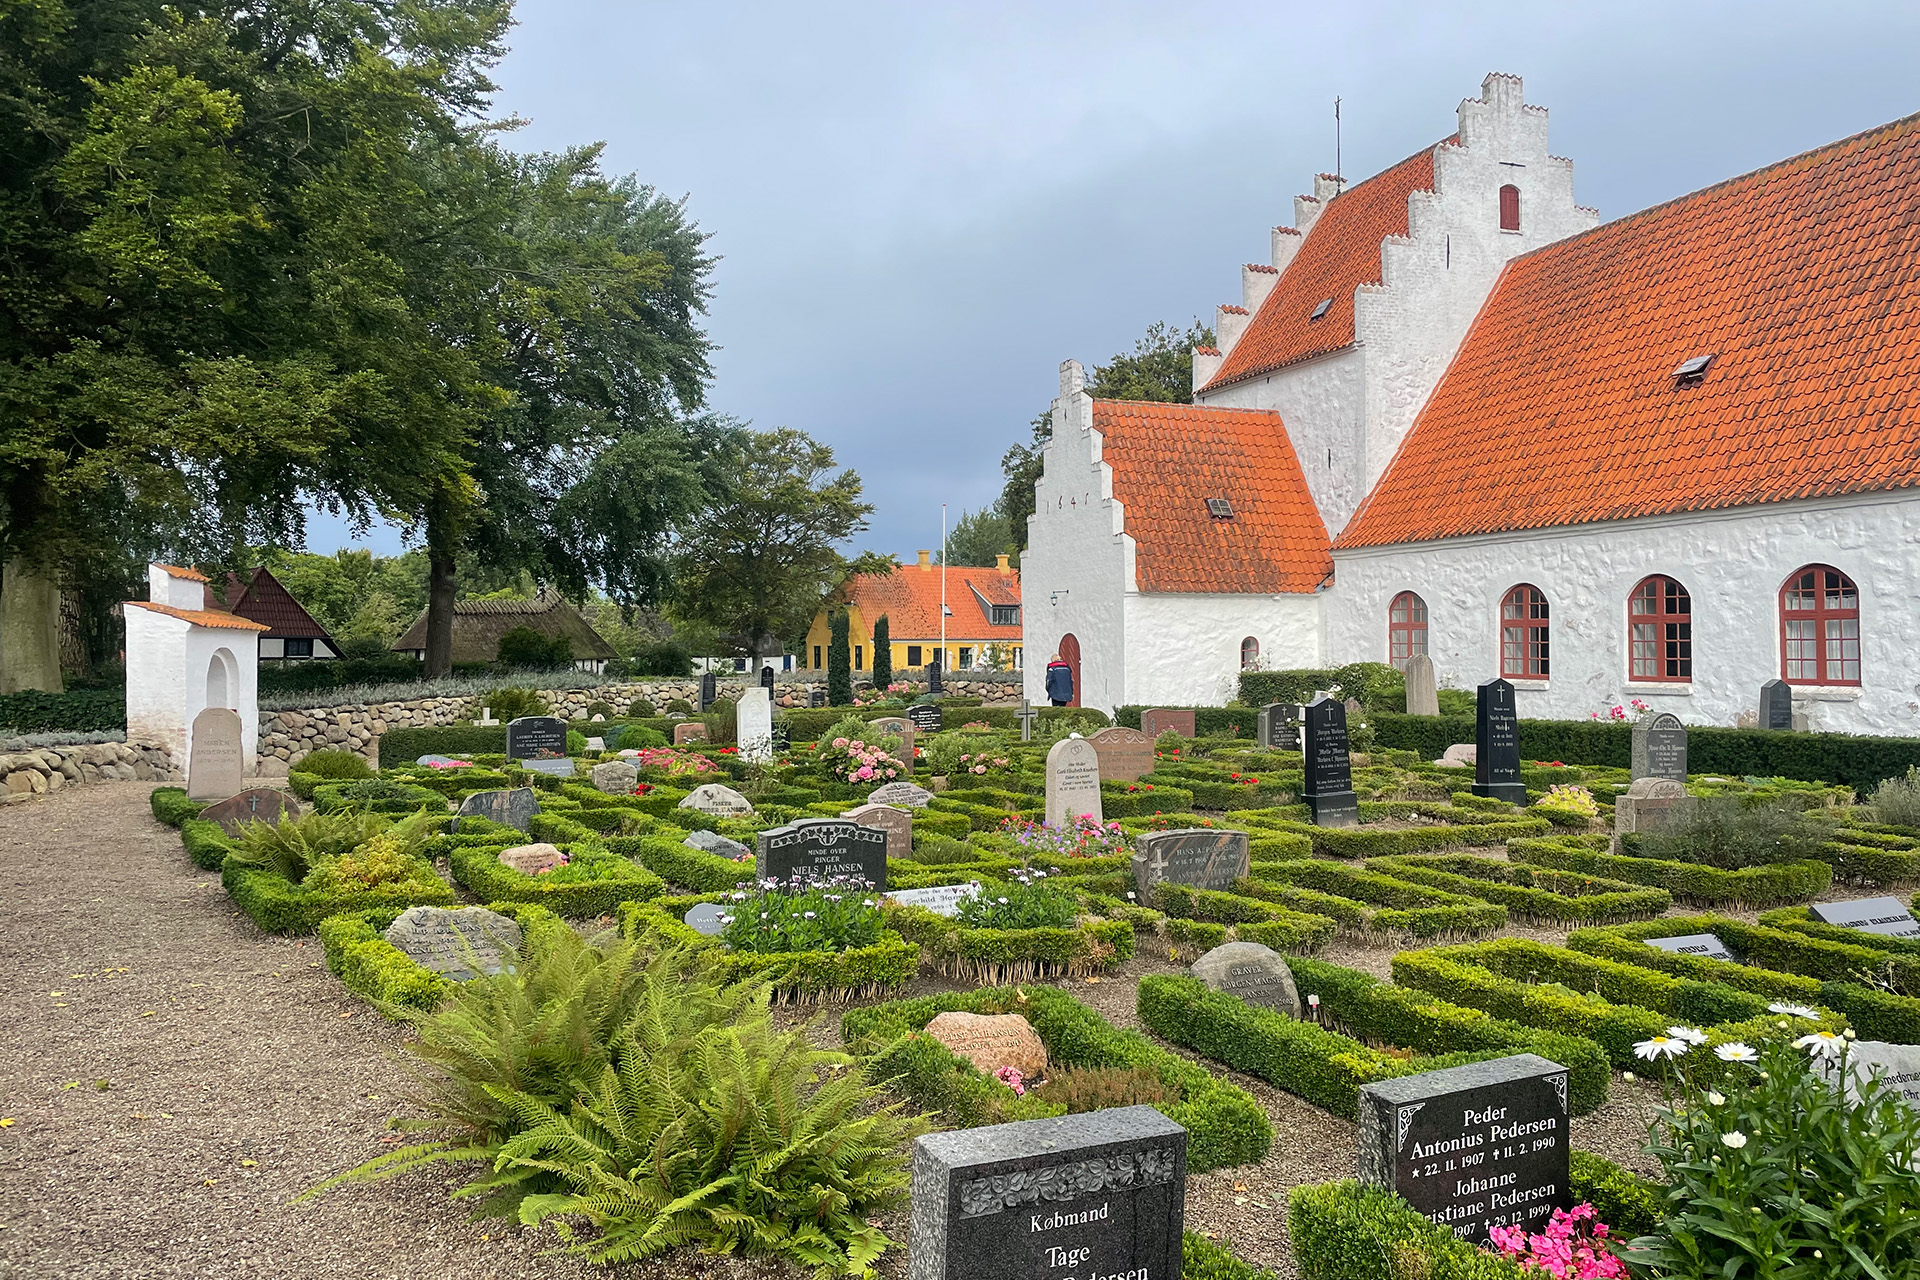 Circular churchyard on Lyo, Denmark